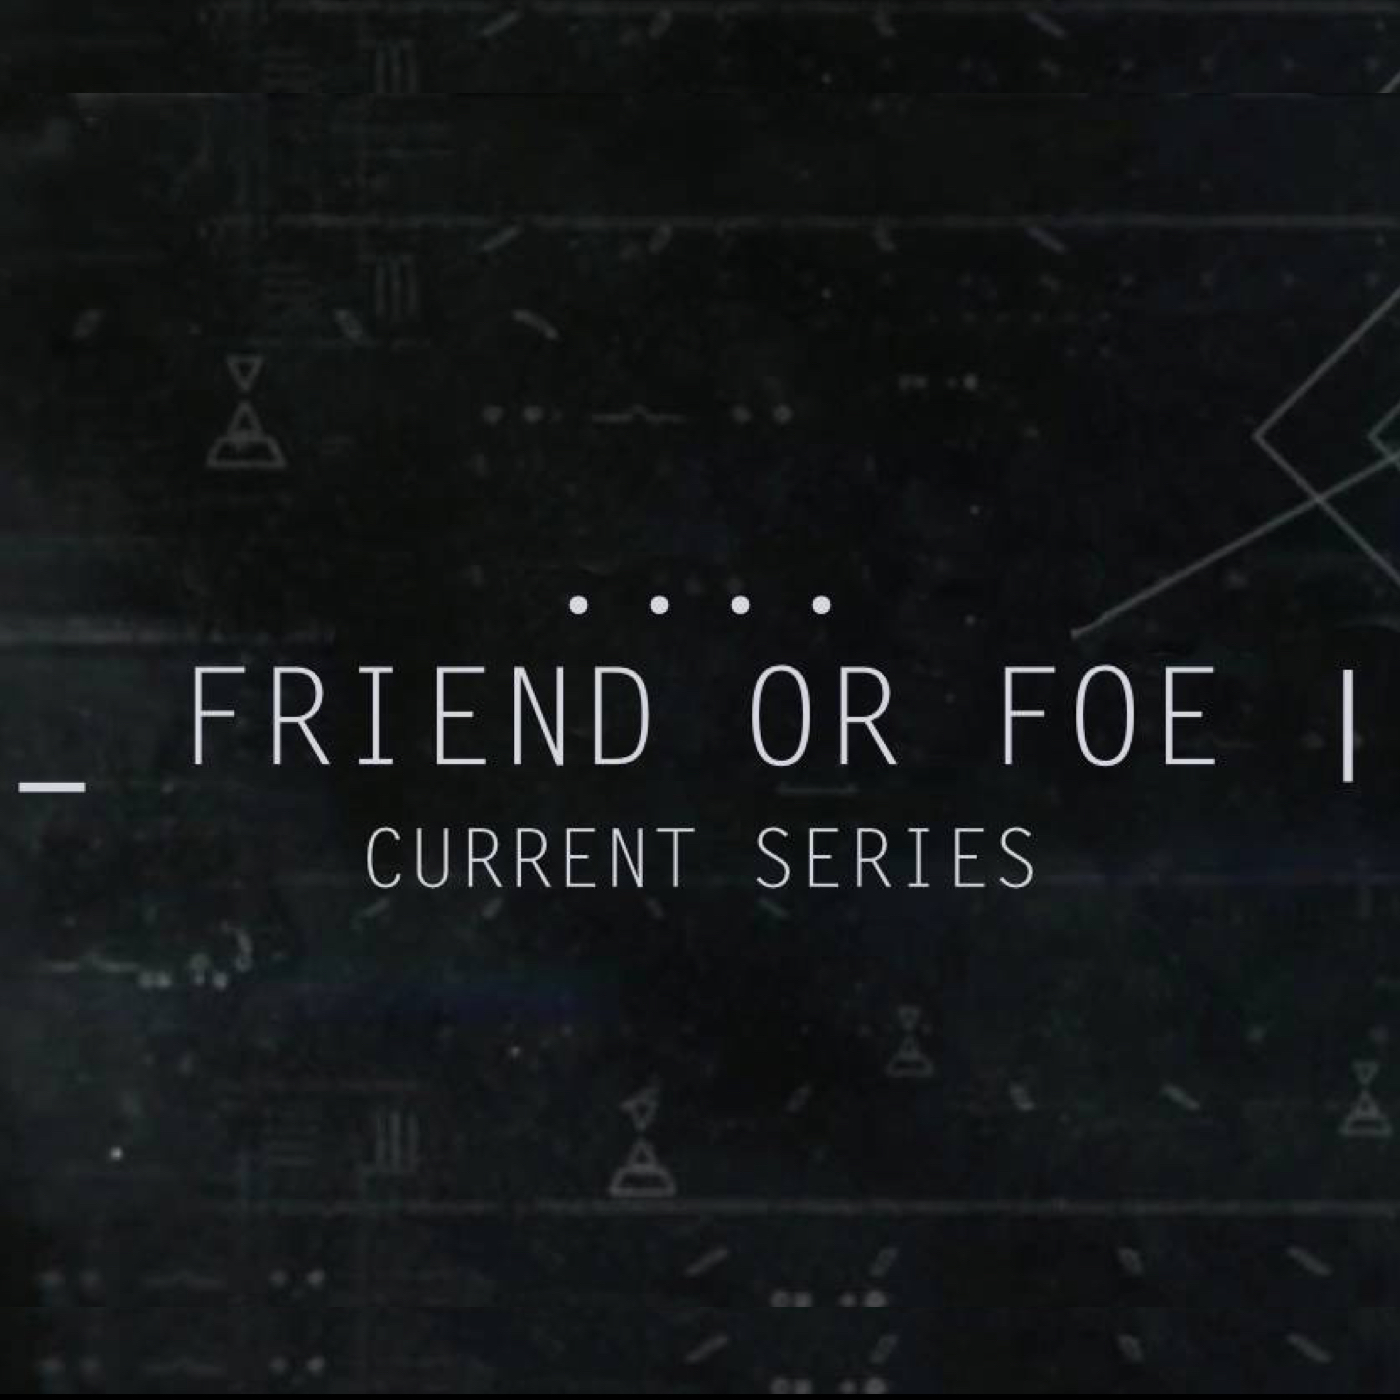 Friend or Foe Series- The Friend Zone